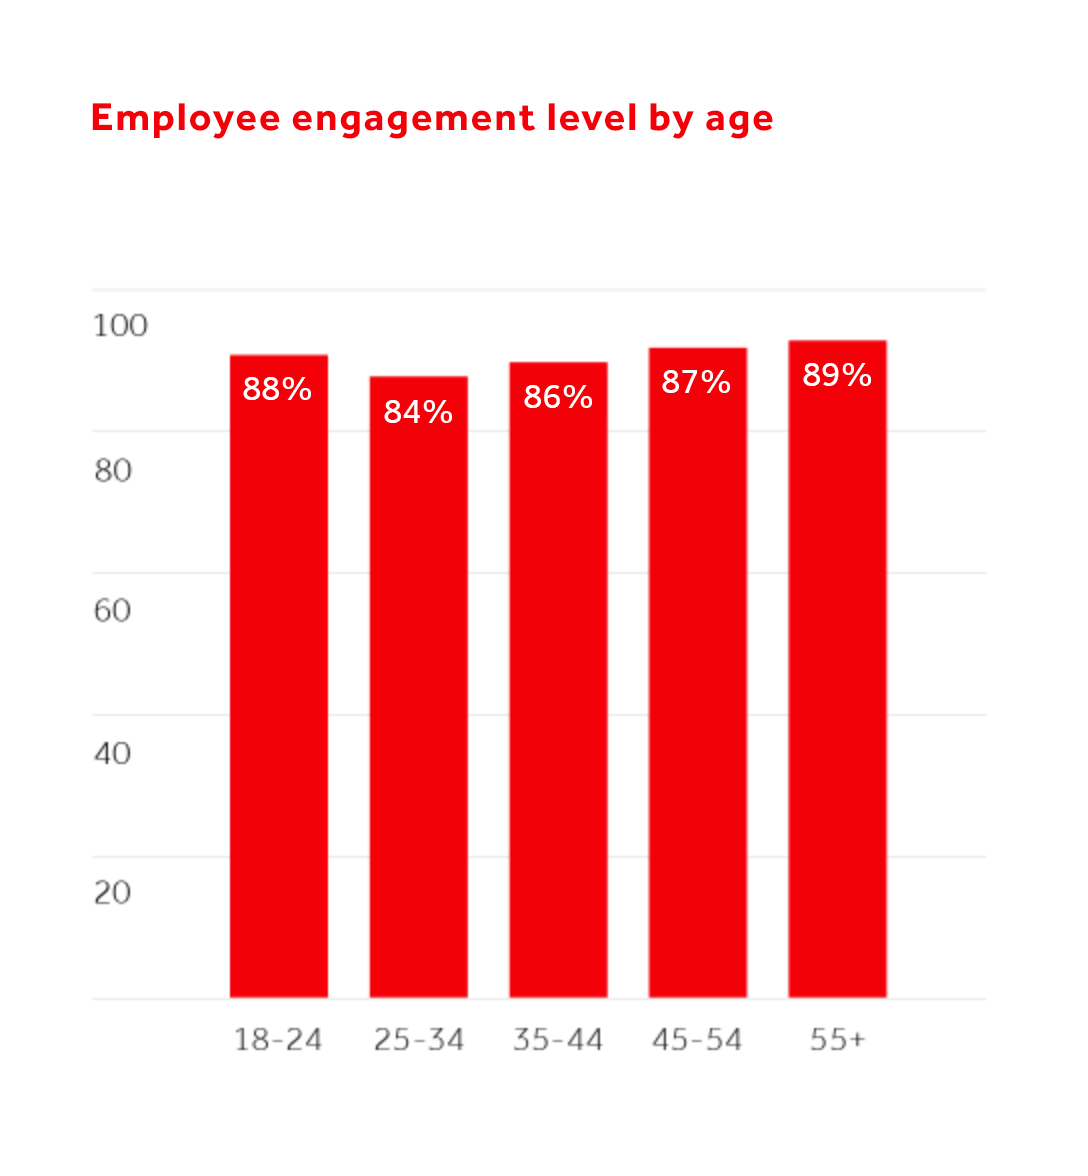 employee-engagement-2022